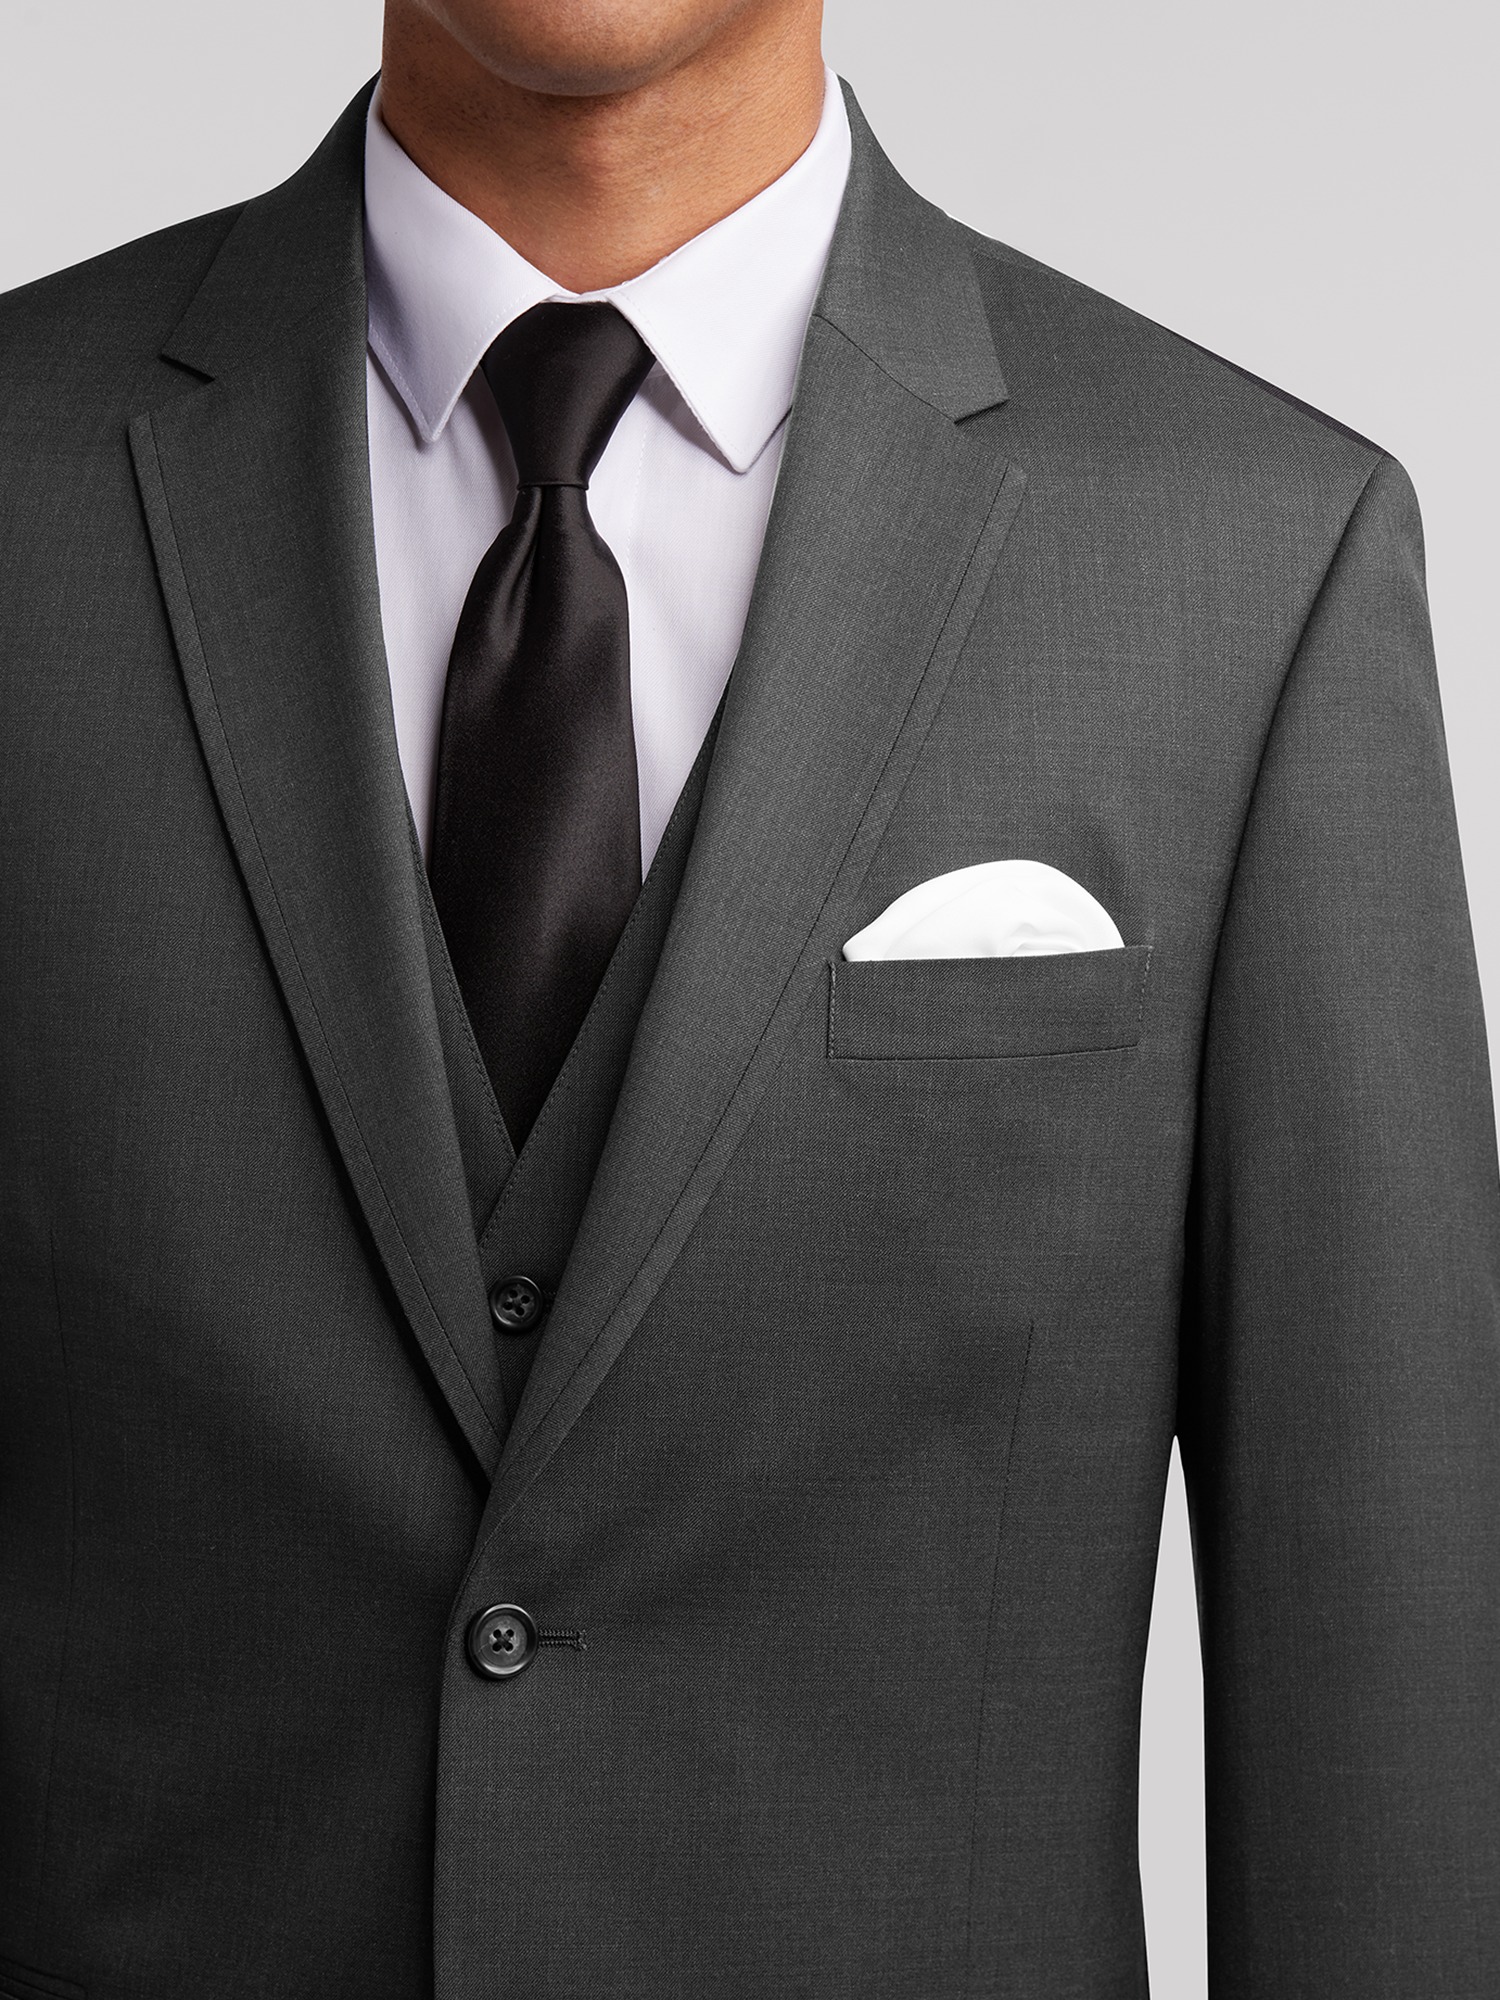 Performance Grey Suit by Calvin Klein | Suit Rental